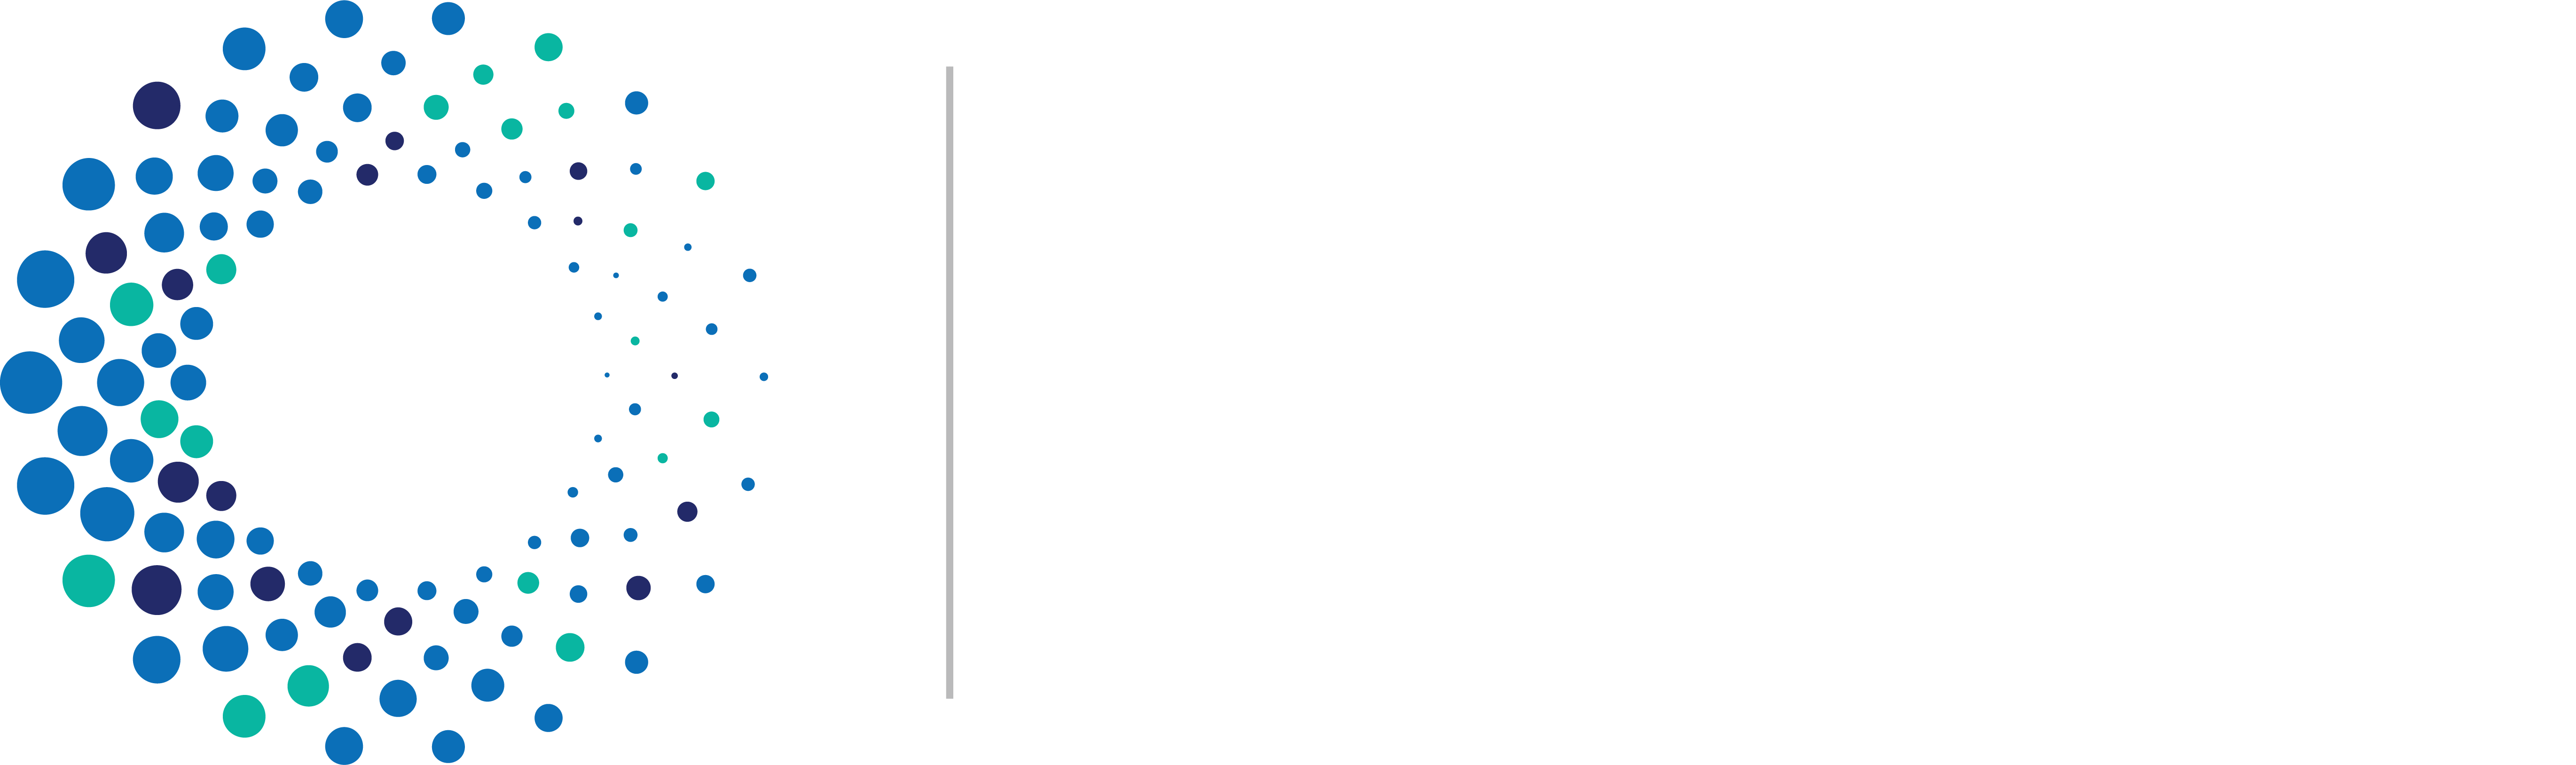 Lausanne Europe